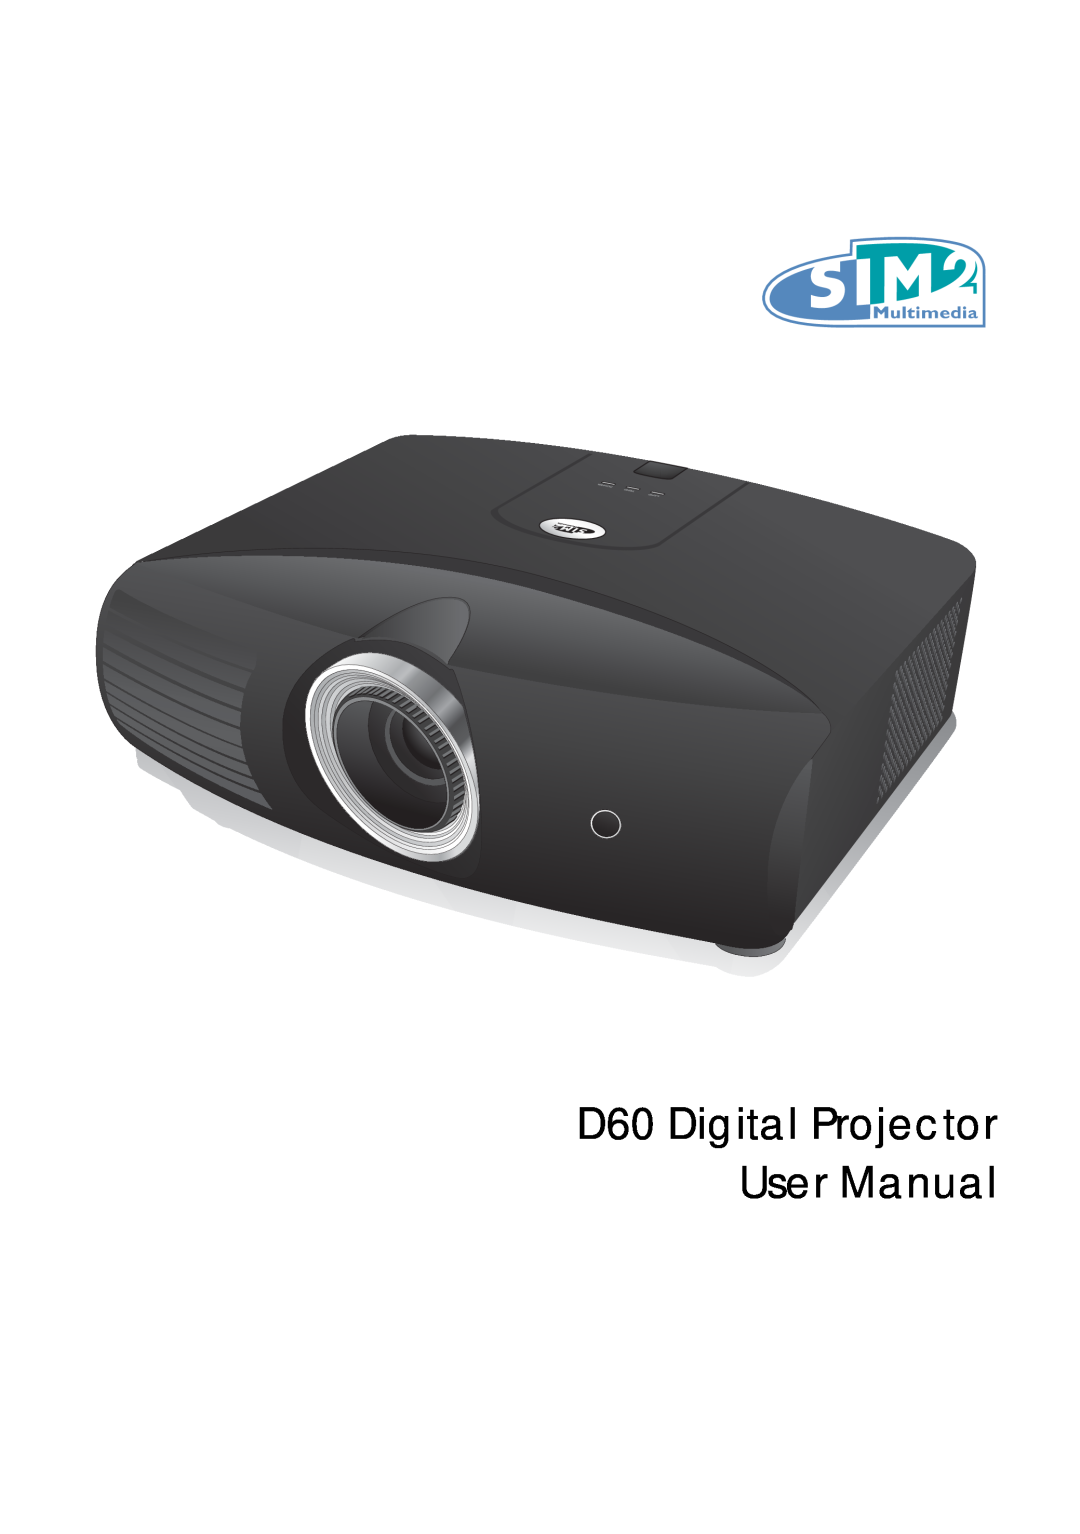 Sim2 Multimedia user manual D60 Digital Projector User Manual 